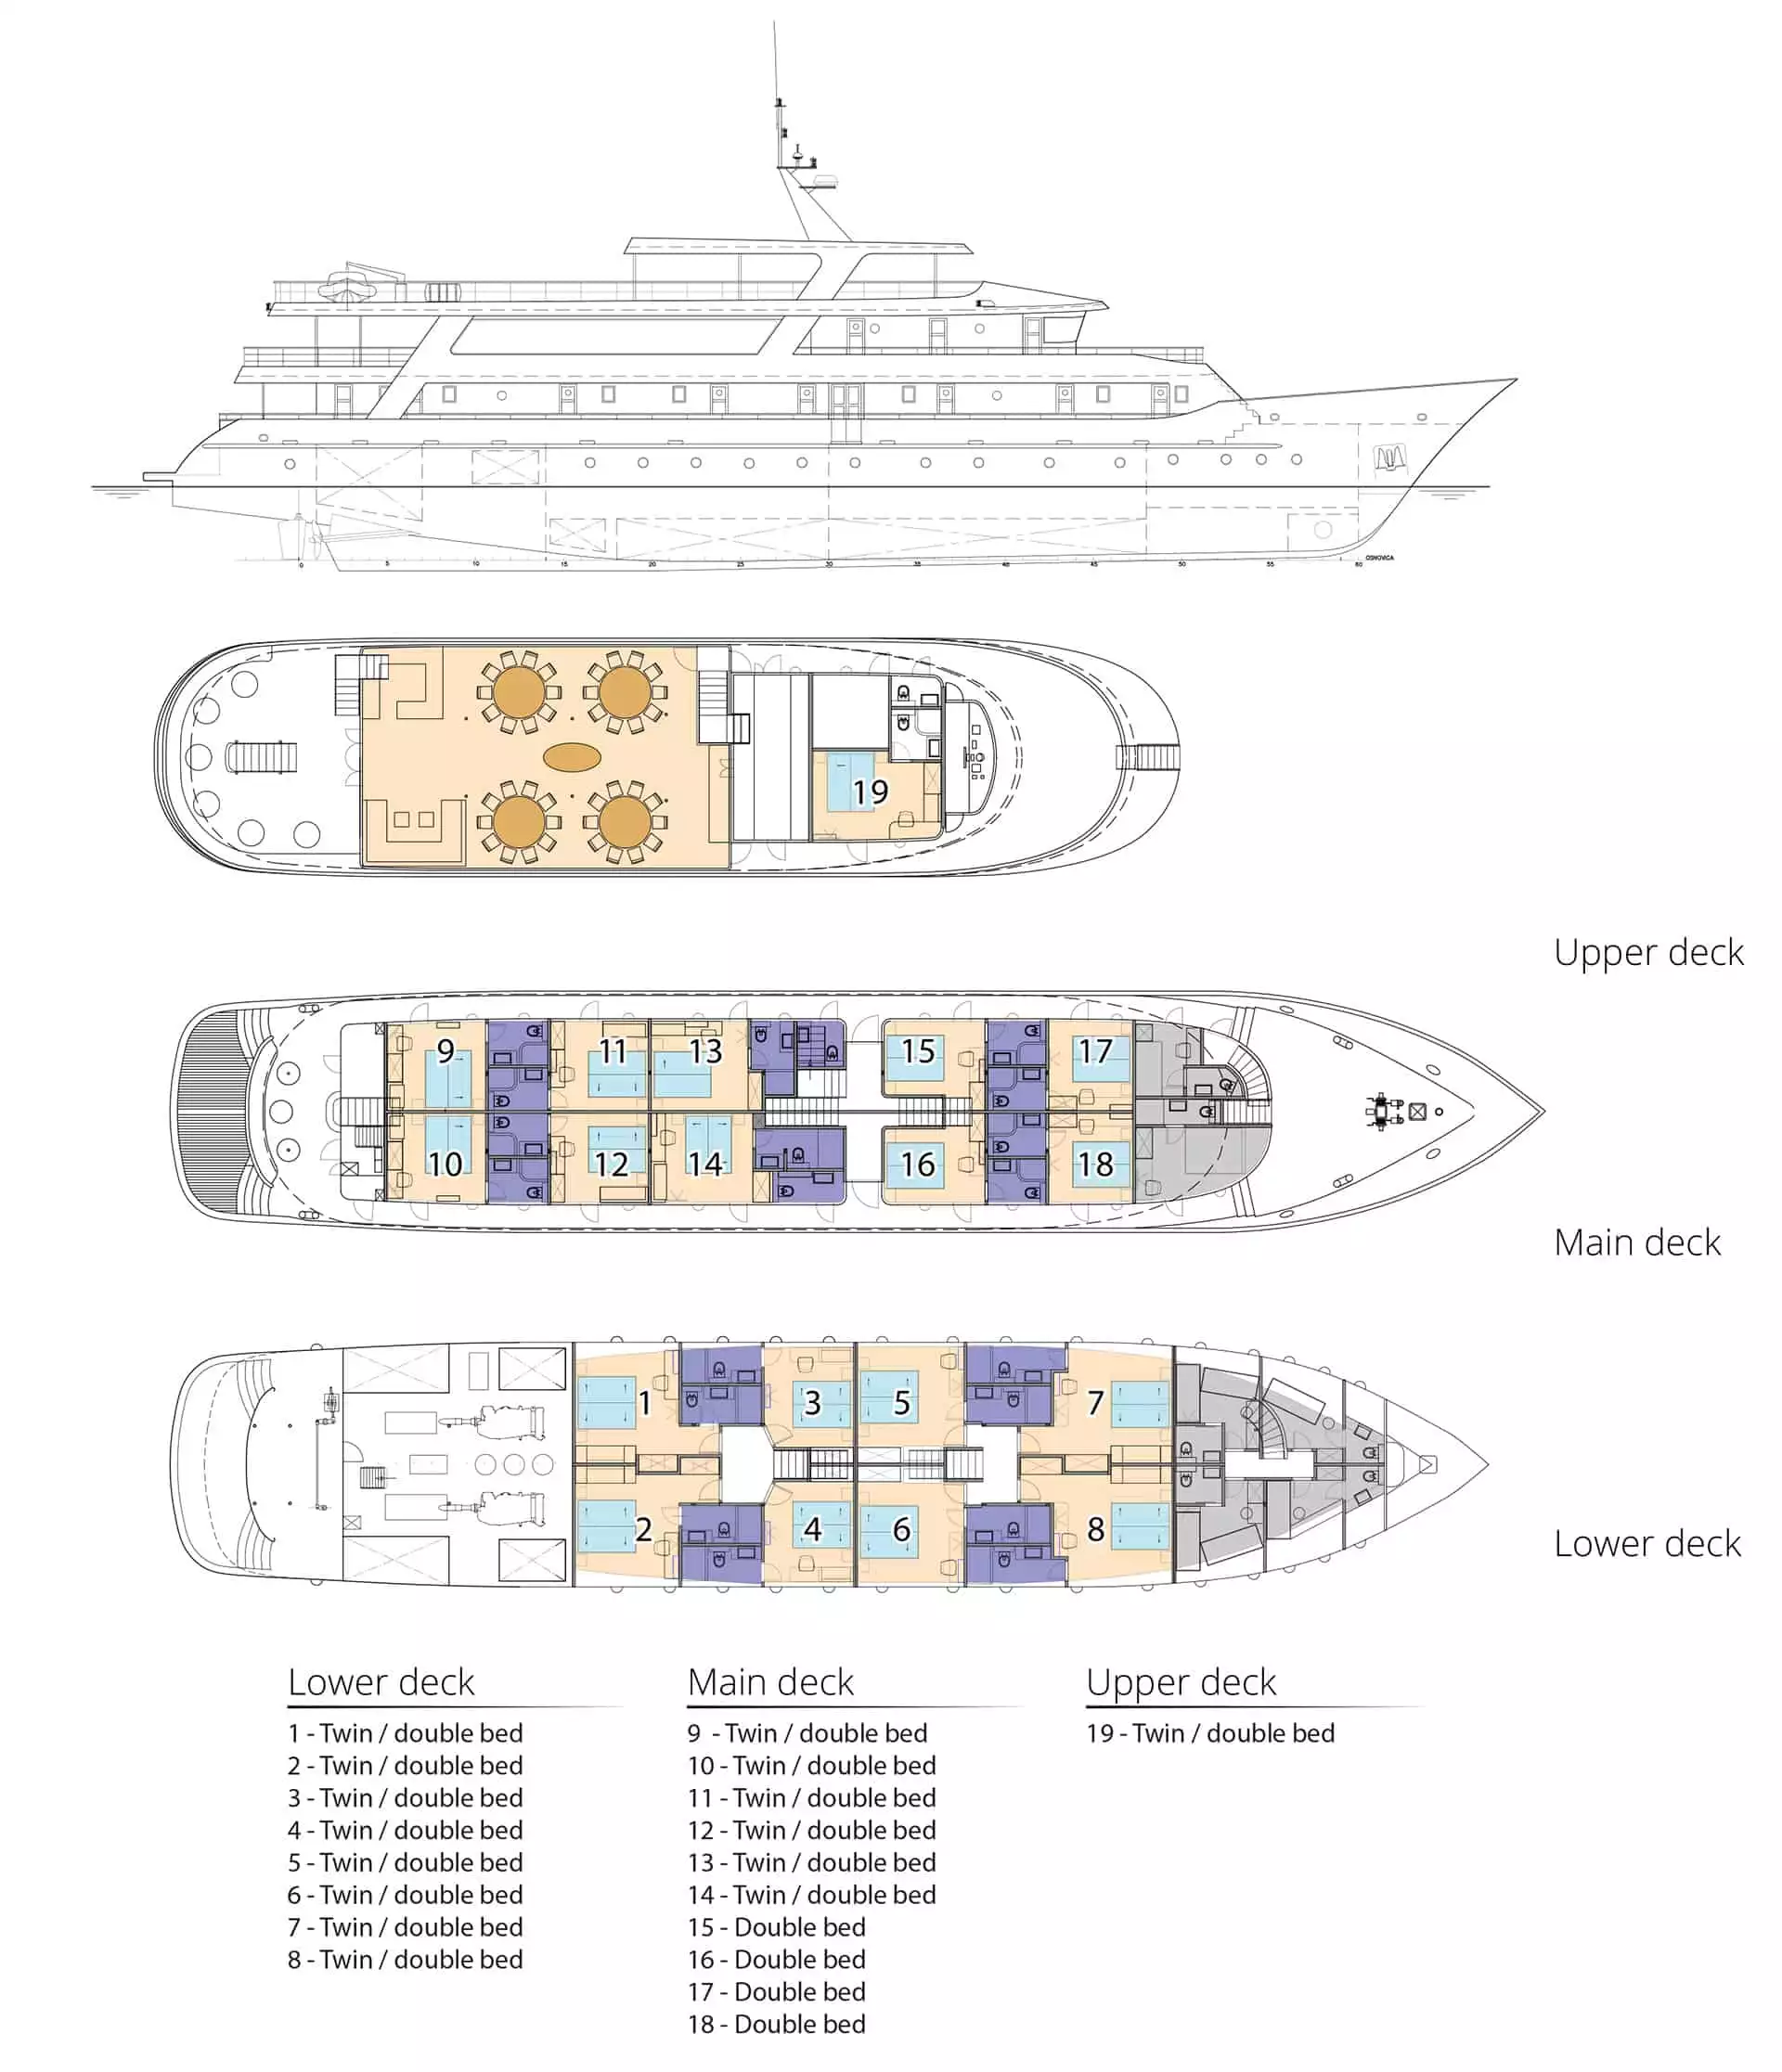 Deck plan of Mediterranean yacht Adriatic Sky showing 19 cabins across 3 passenger decks.